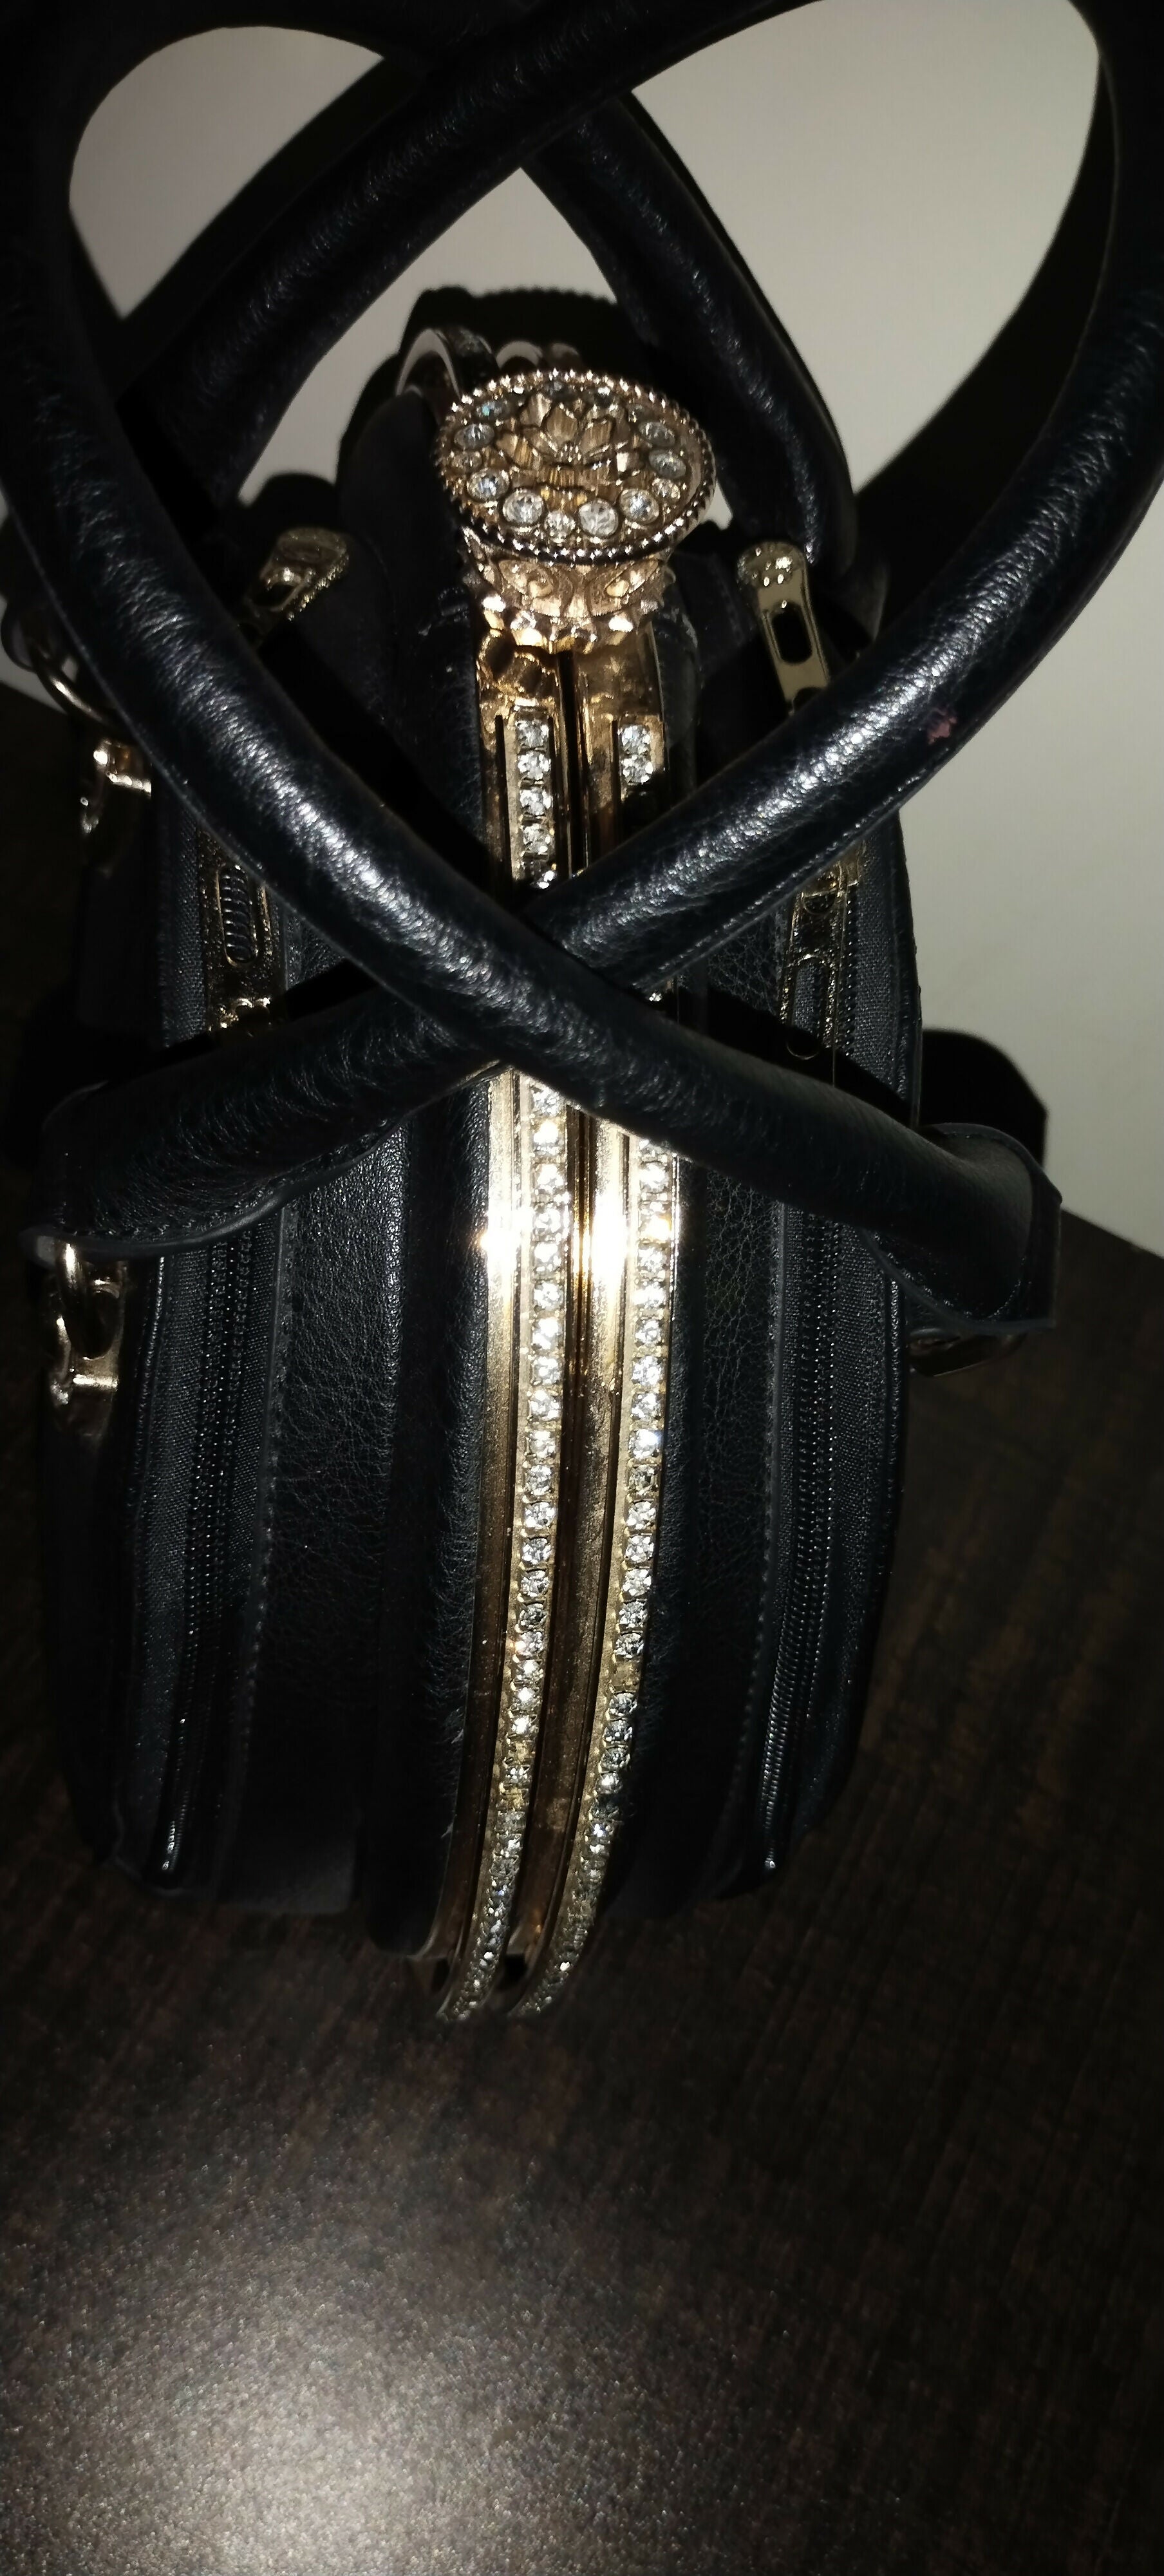 MODA | Black Hand Bag | Women Bags | Large | Worn Once